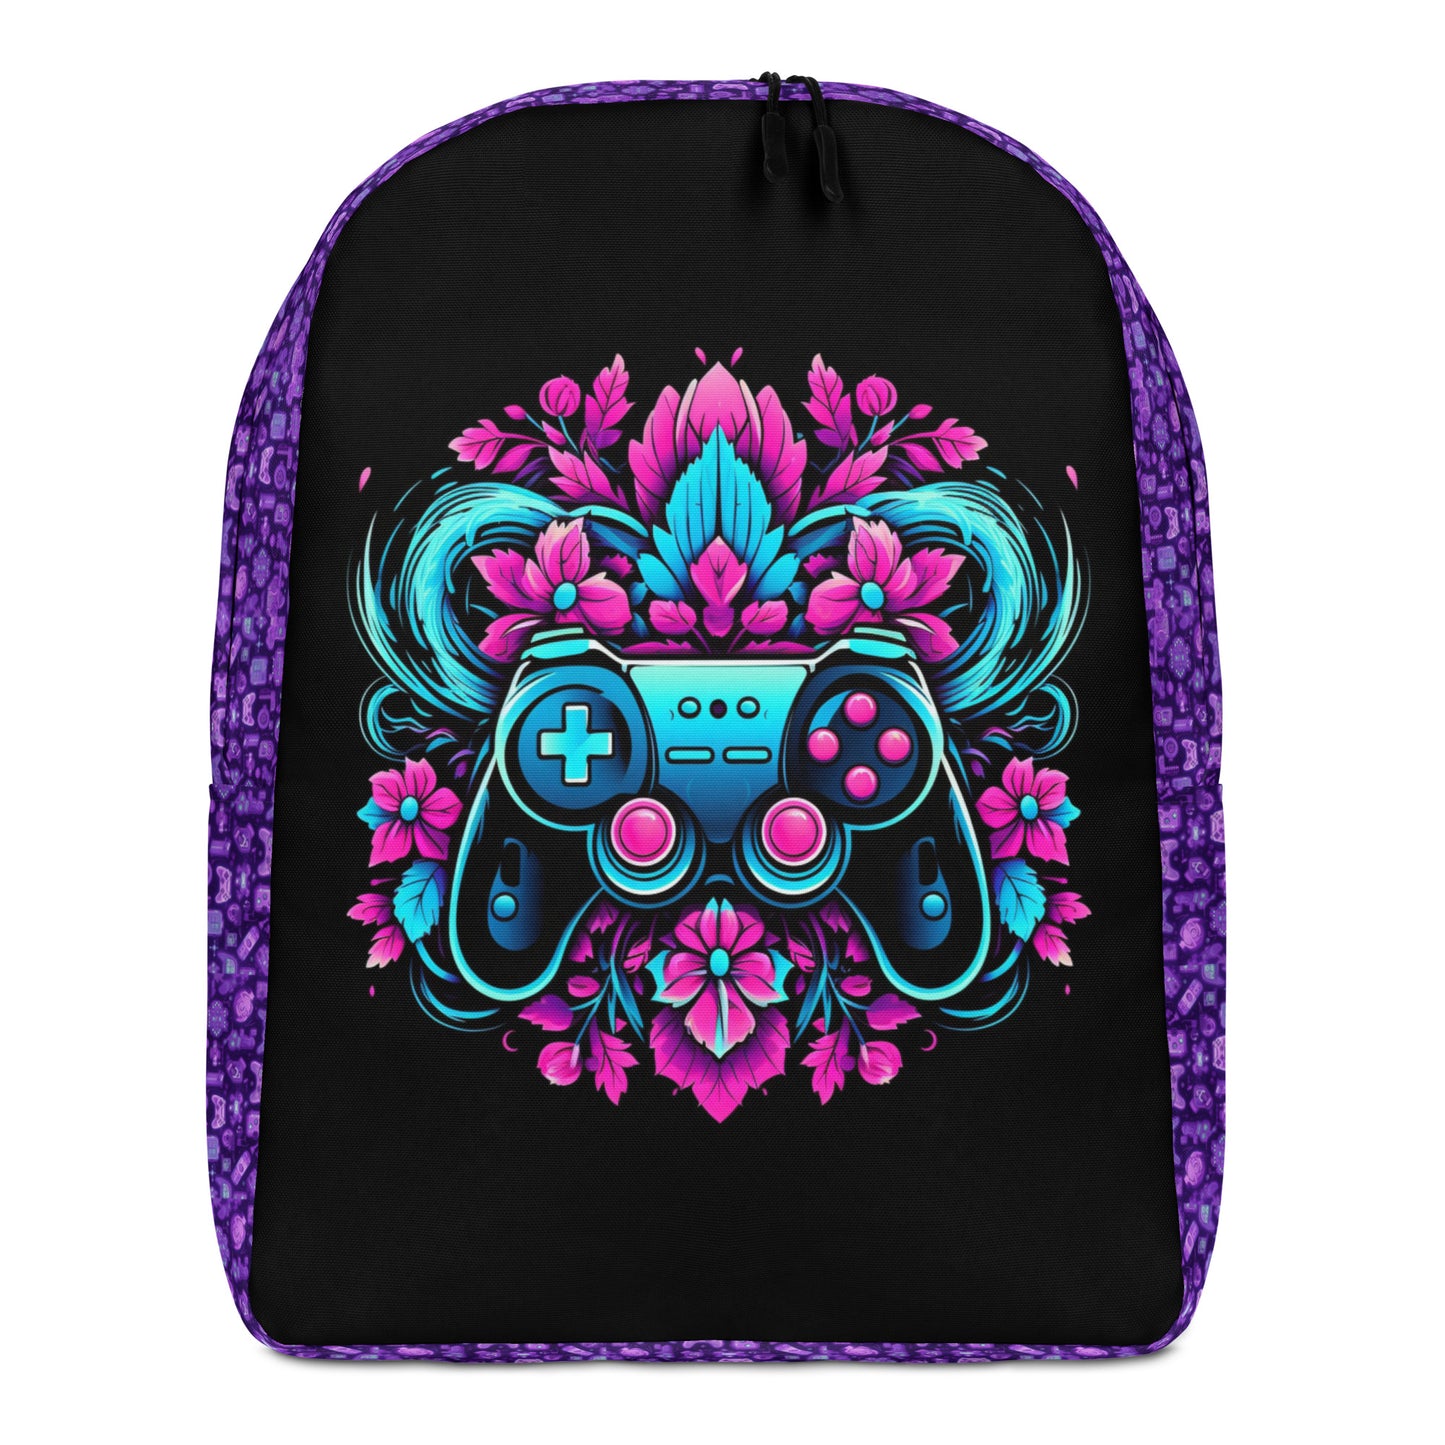 Level Up Minimalist Backpack, Backpack with 15" inside pocket for Laptop, Hidden Pocket for Wallet, Lightweight well made